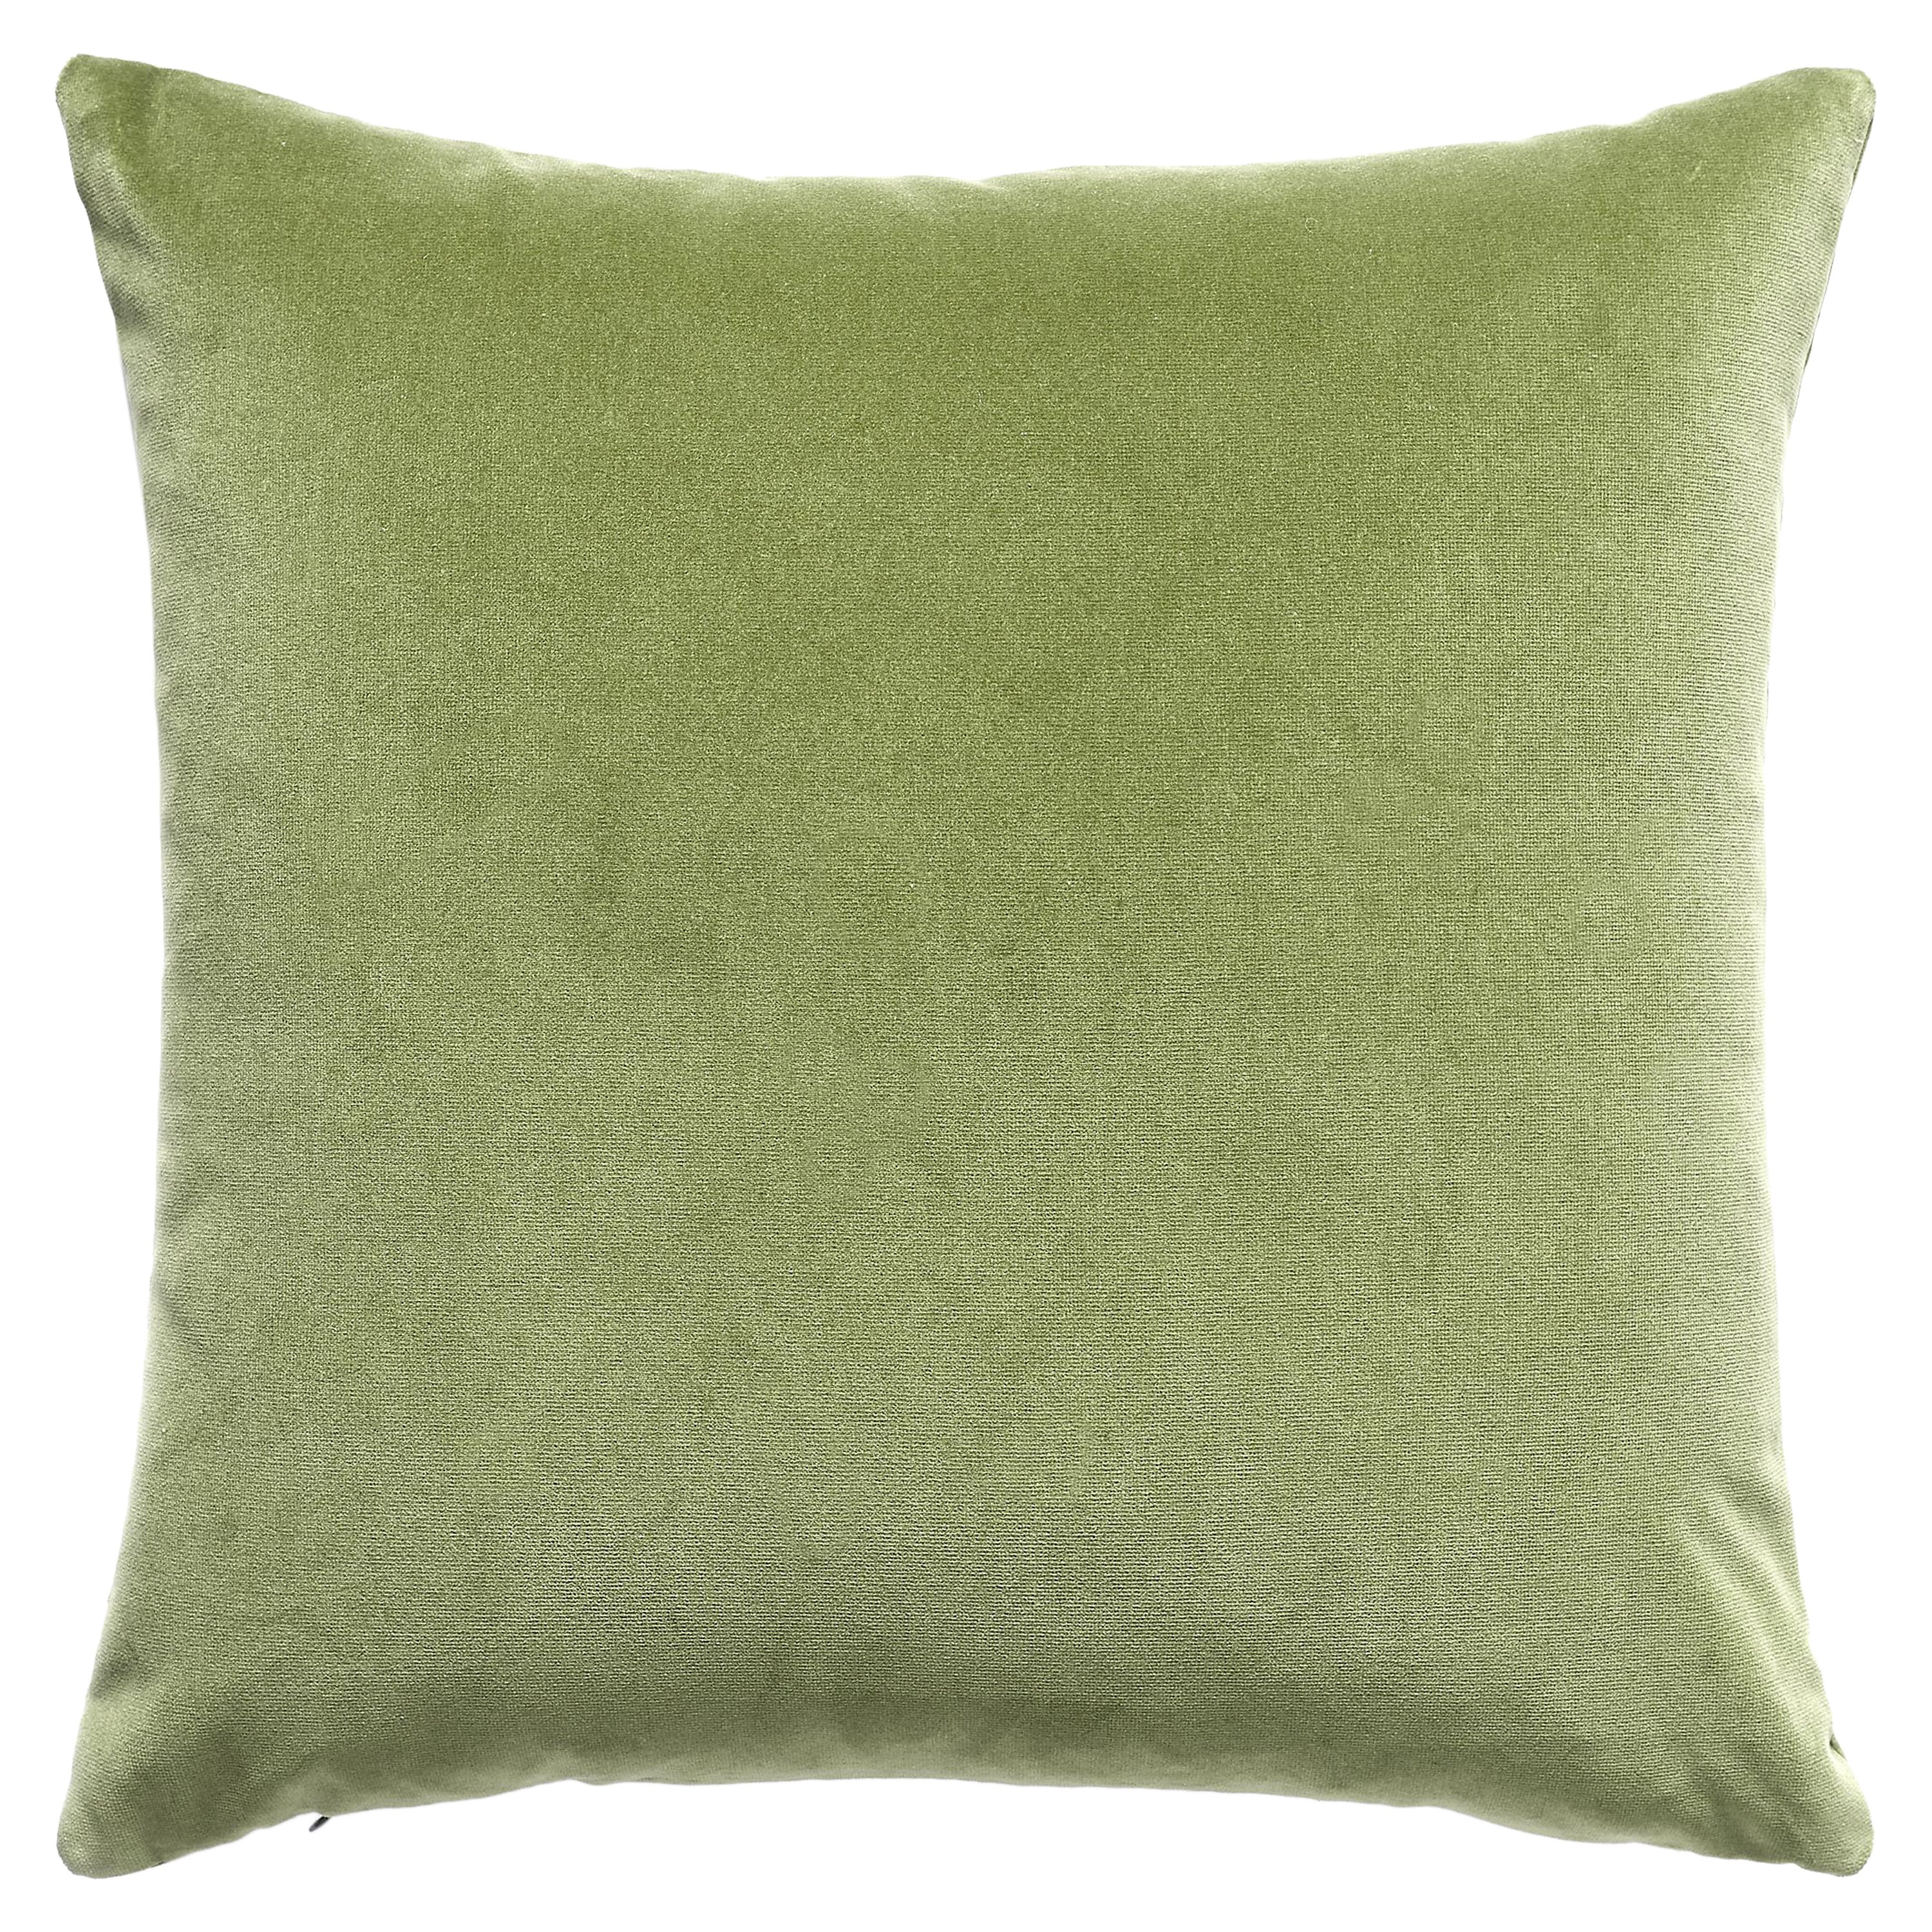 Indus Pillow